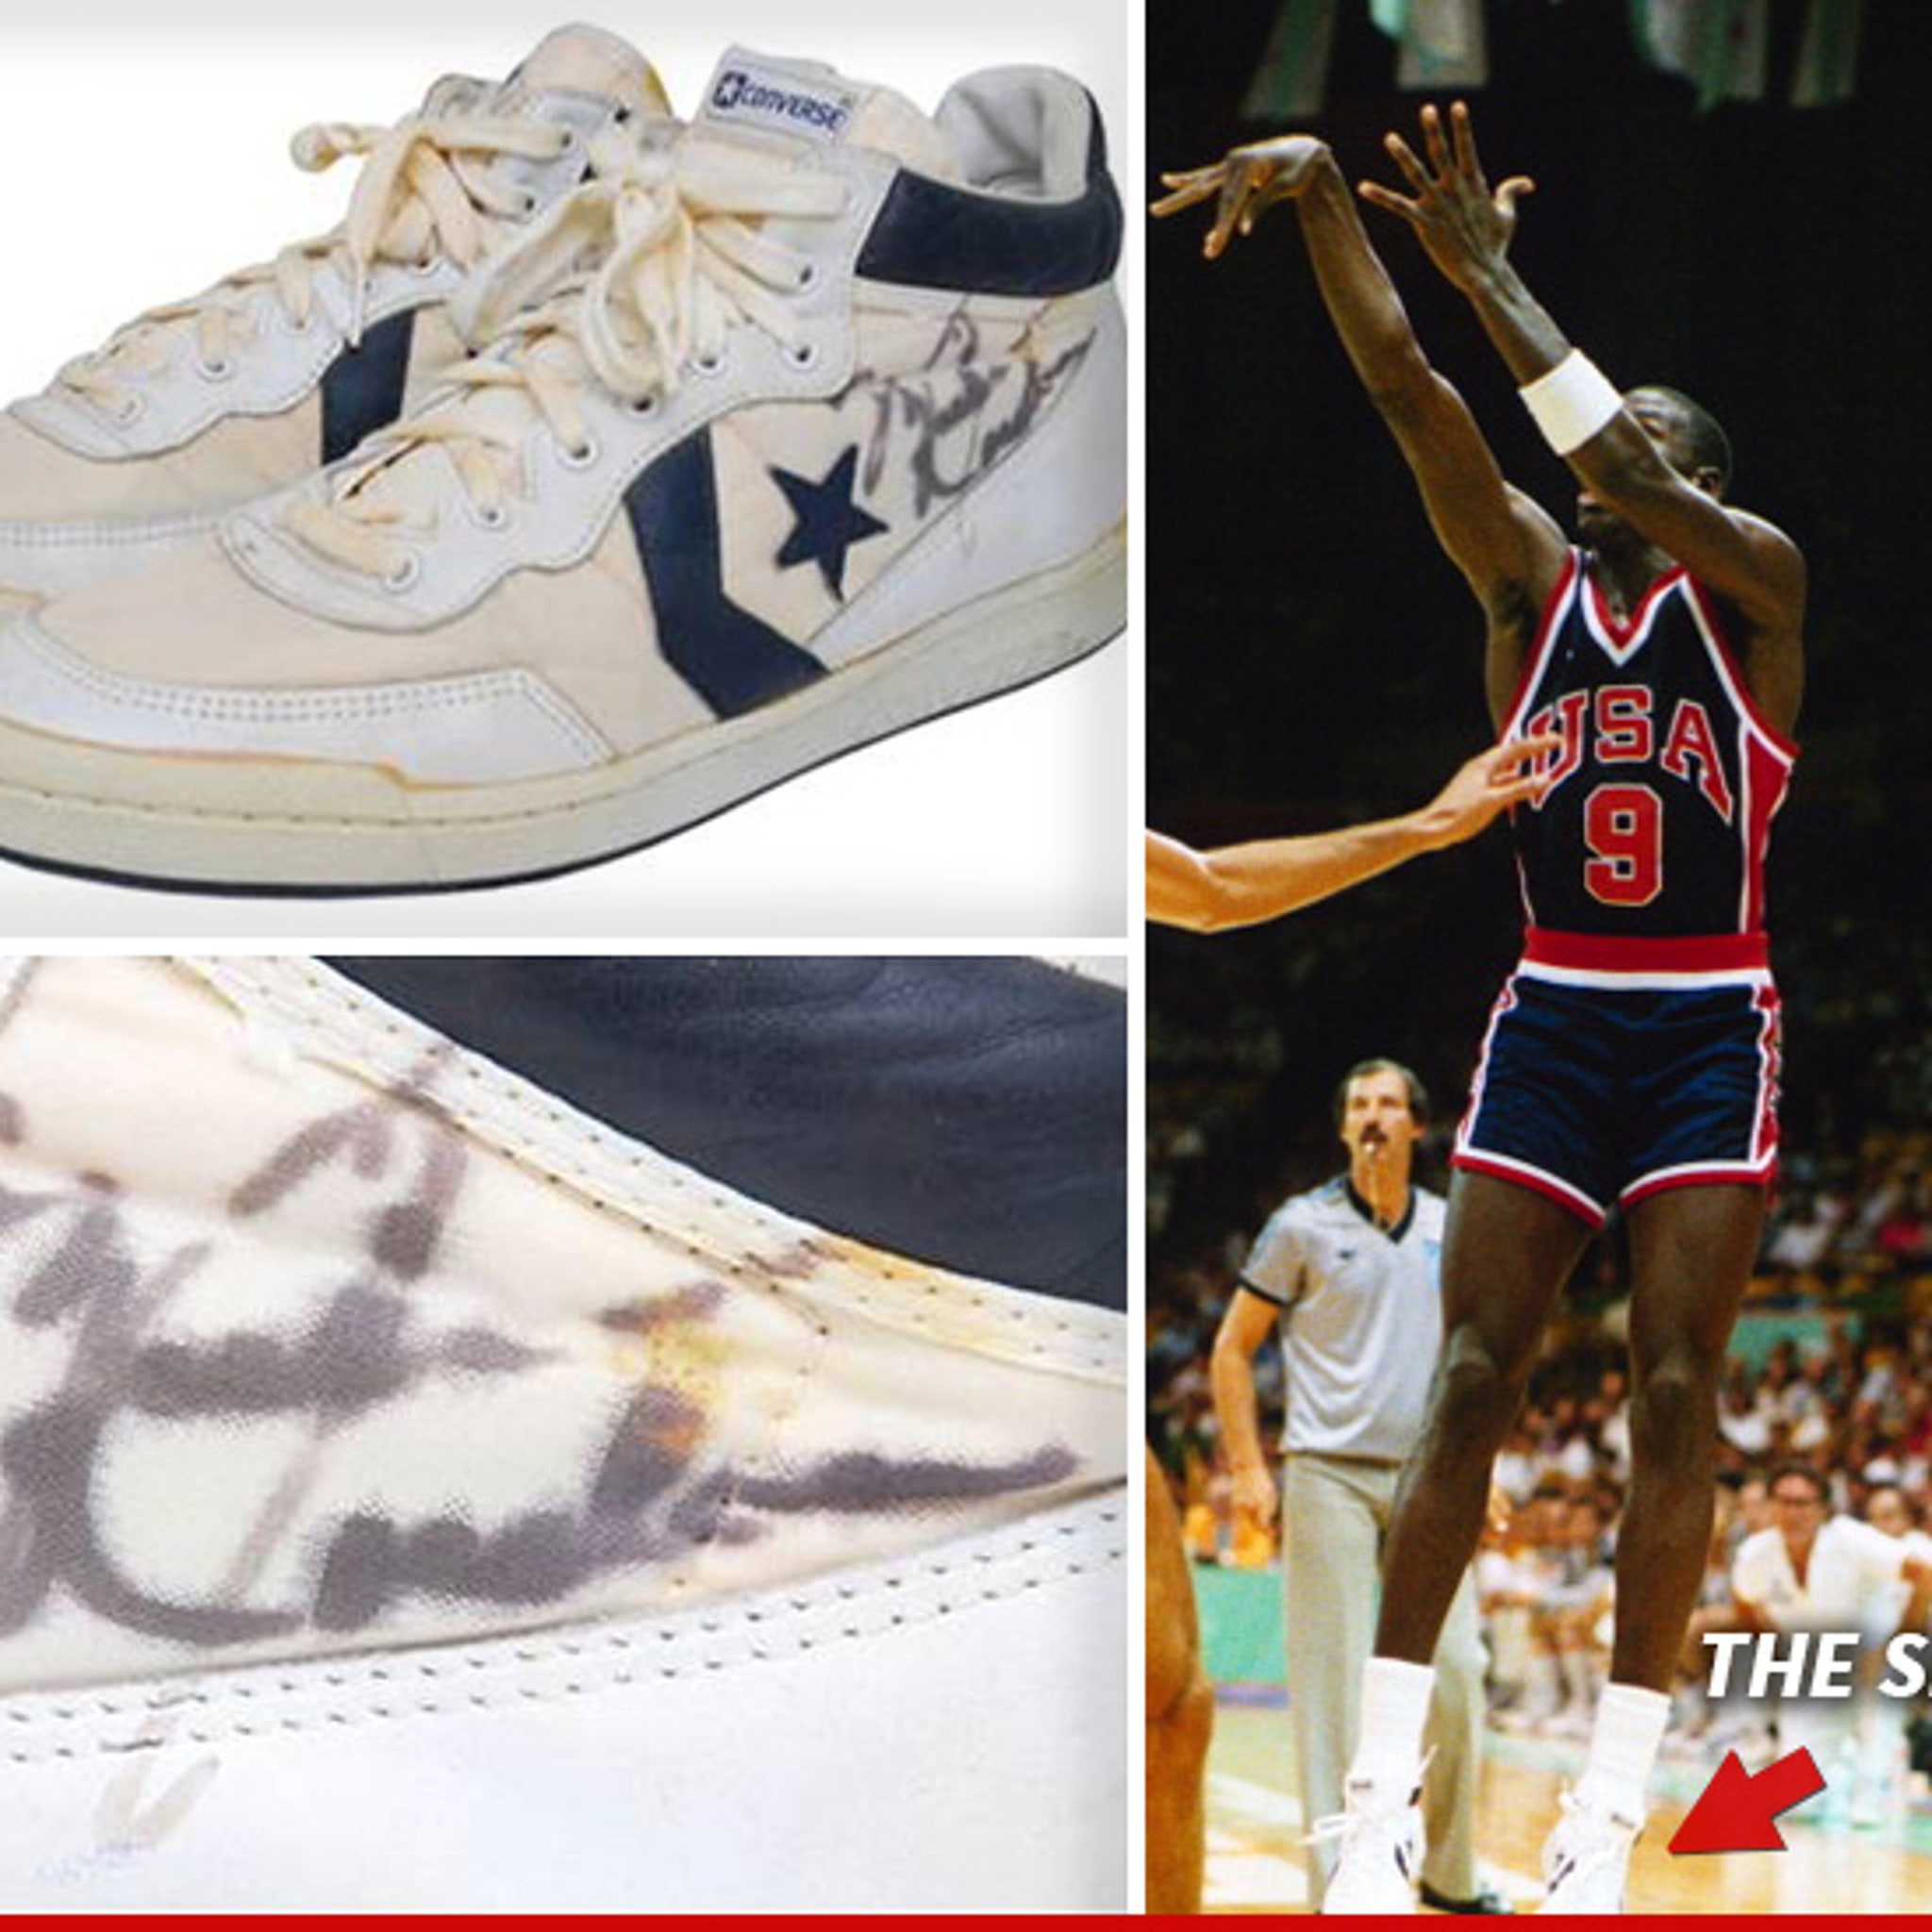 Converse sneakers Michael Jordan wore in the 1984 Olympics just